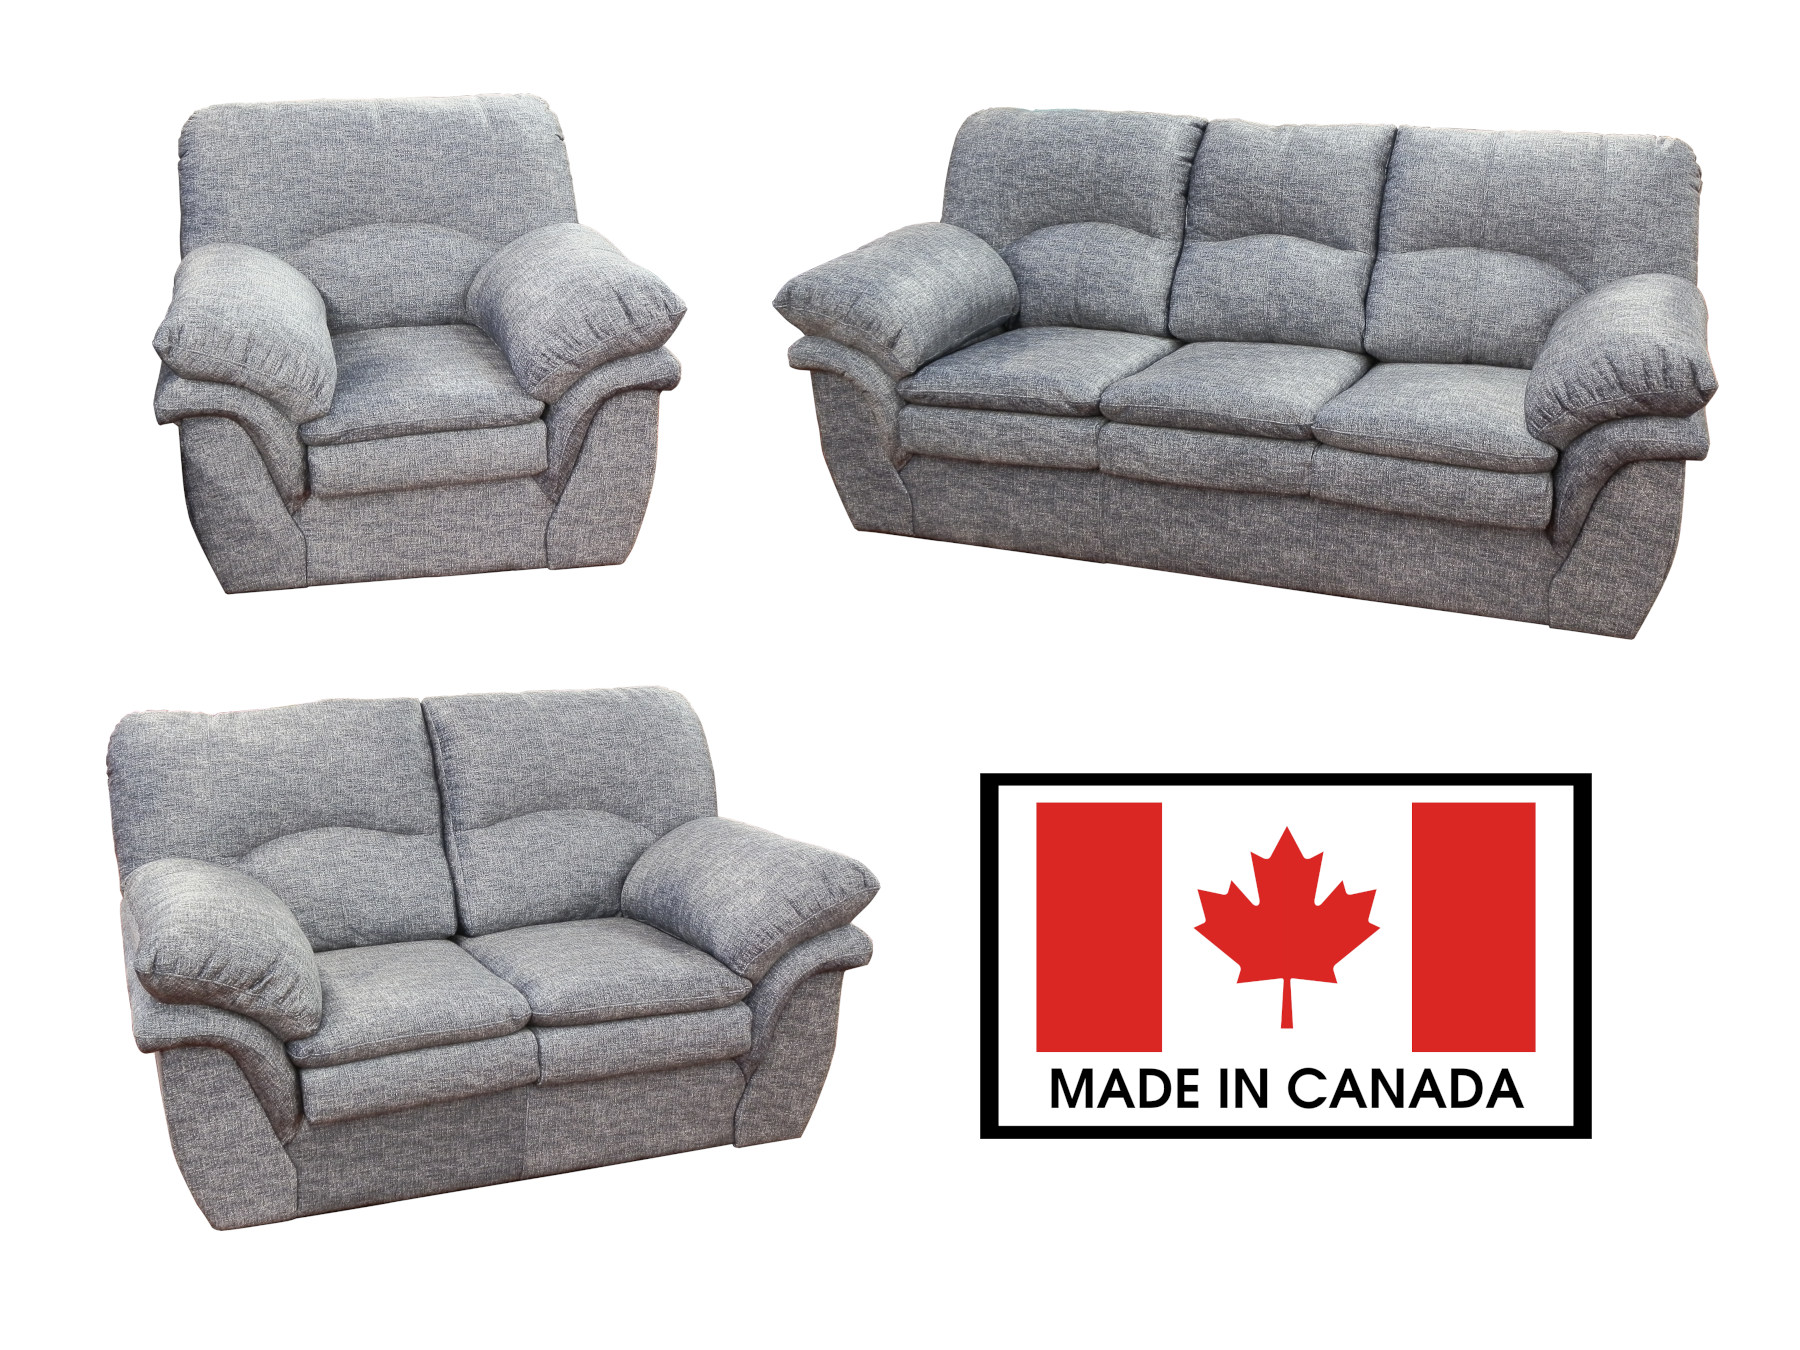 24088 - Sofa Set - Made in Canada - FN-6050 LP